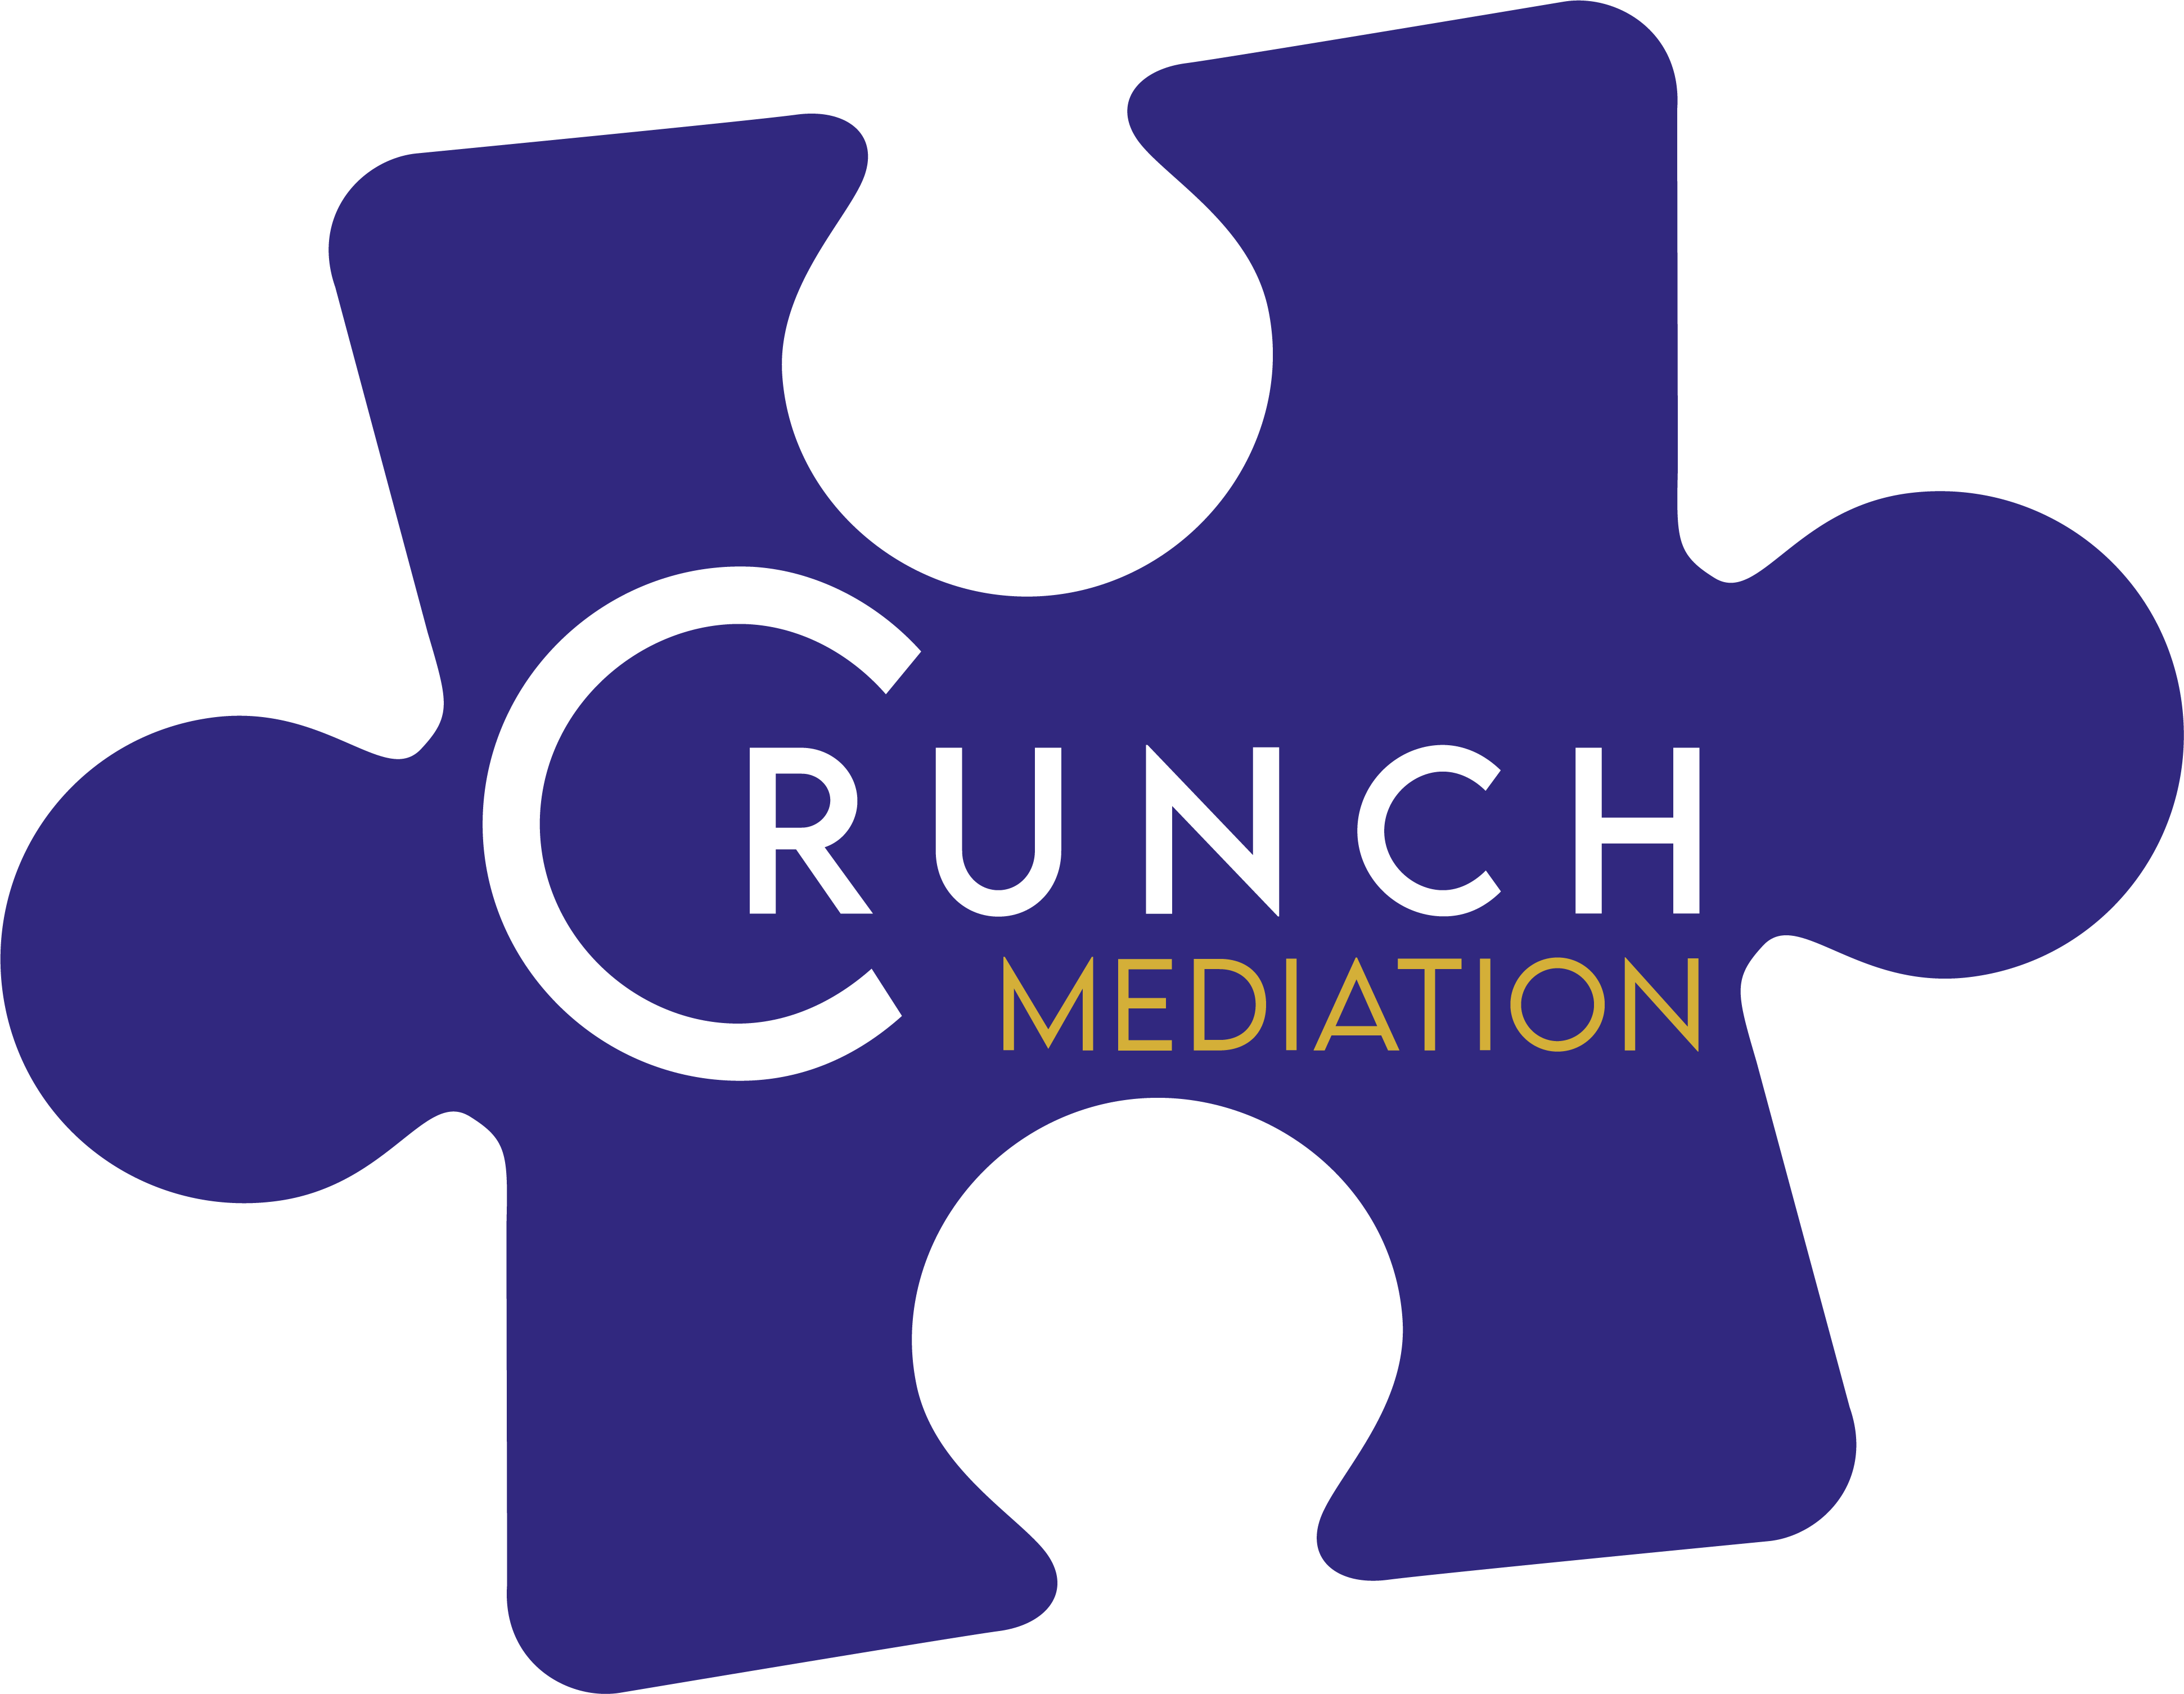 Crunch Mediation